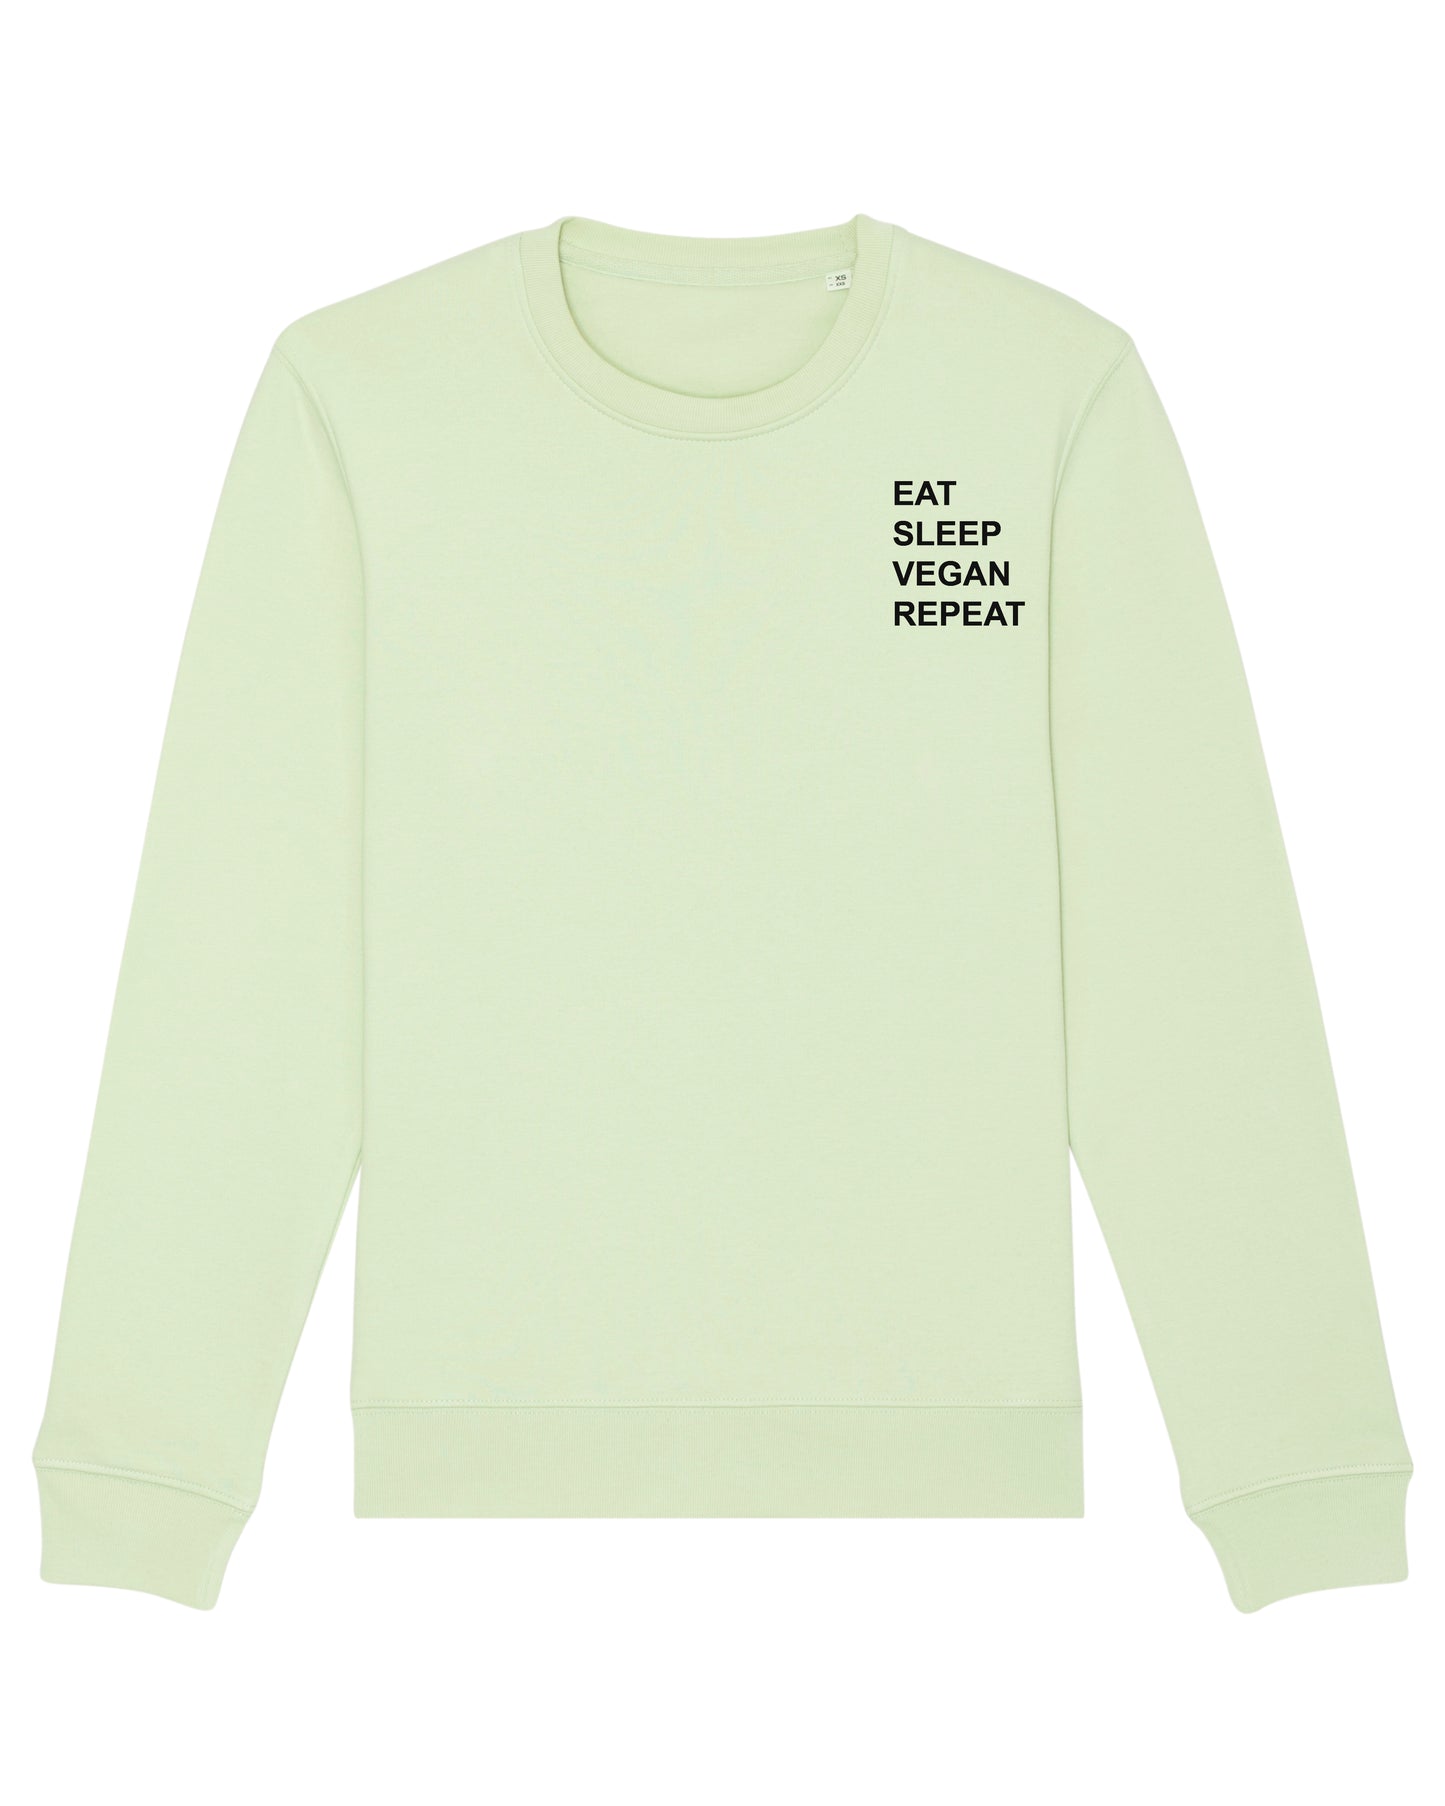 Eat Sleep Vegan Repeat Sweater Men/Unisex